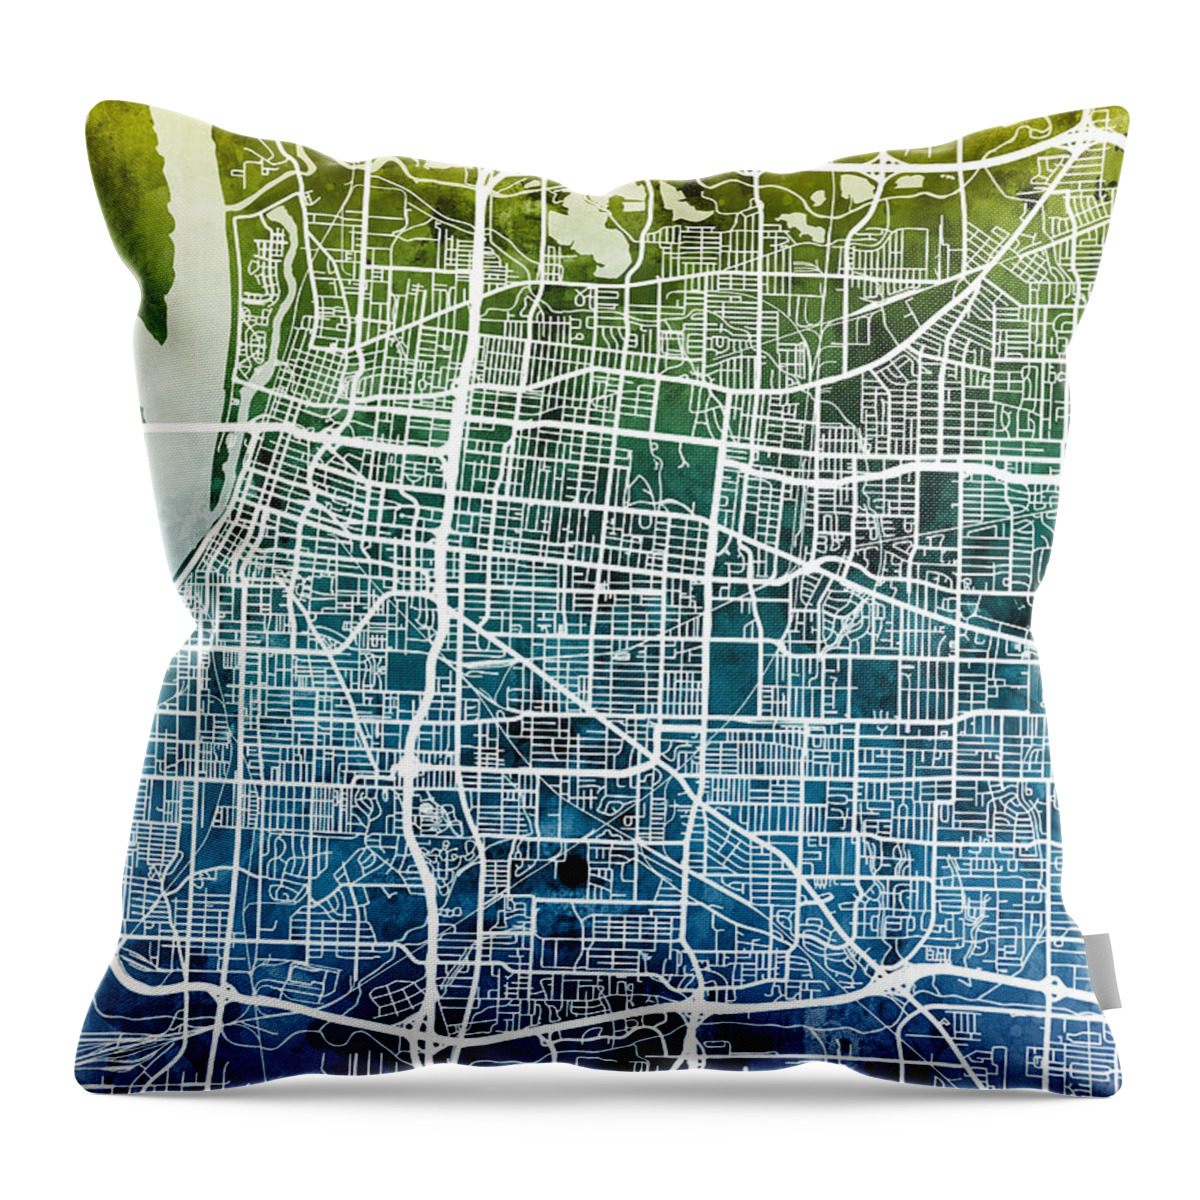 Memphis Throw Pillow featuring the digital art Memphis Tennessee City Map by Michael Tompsett